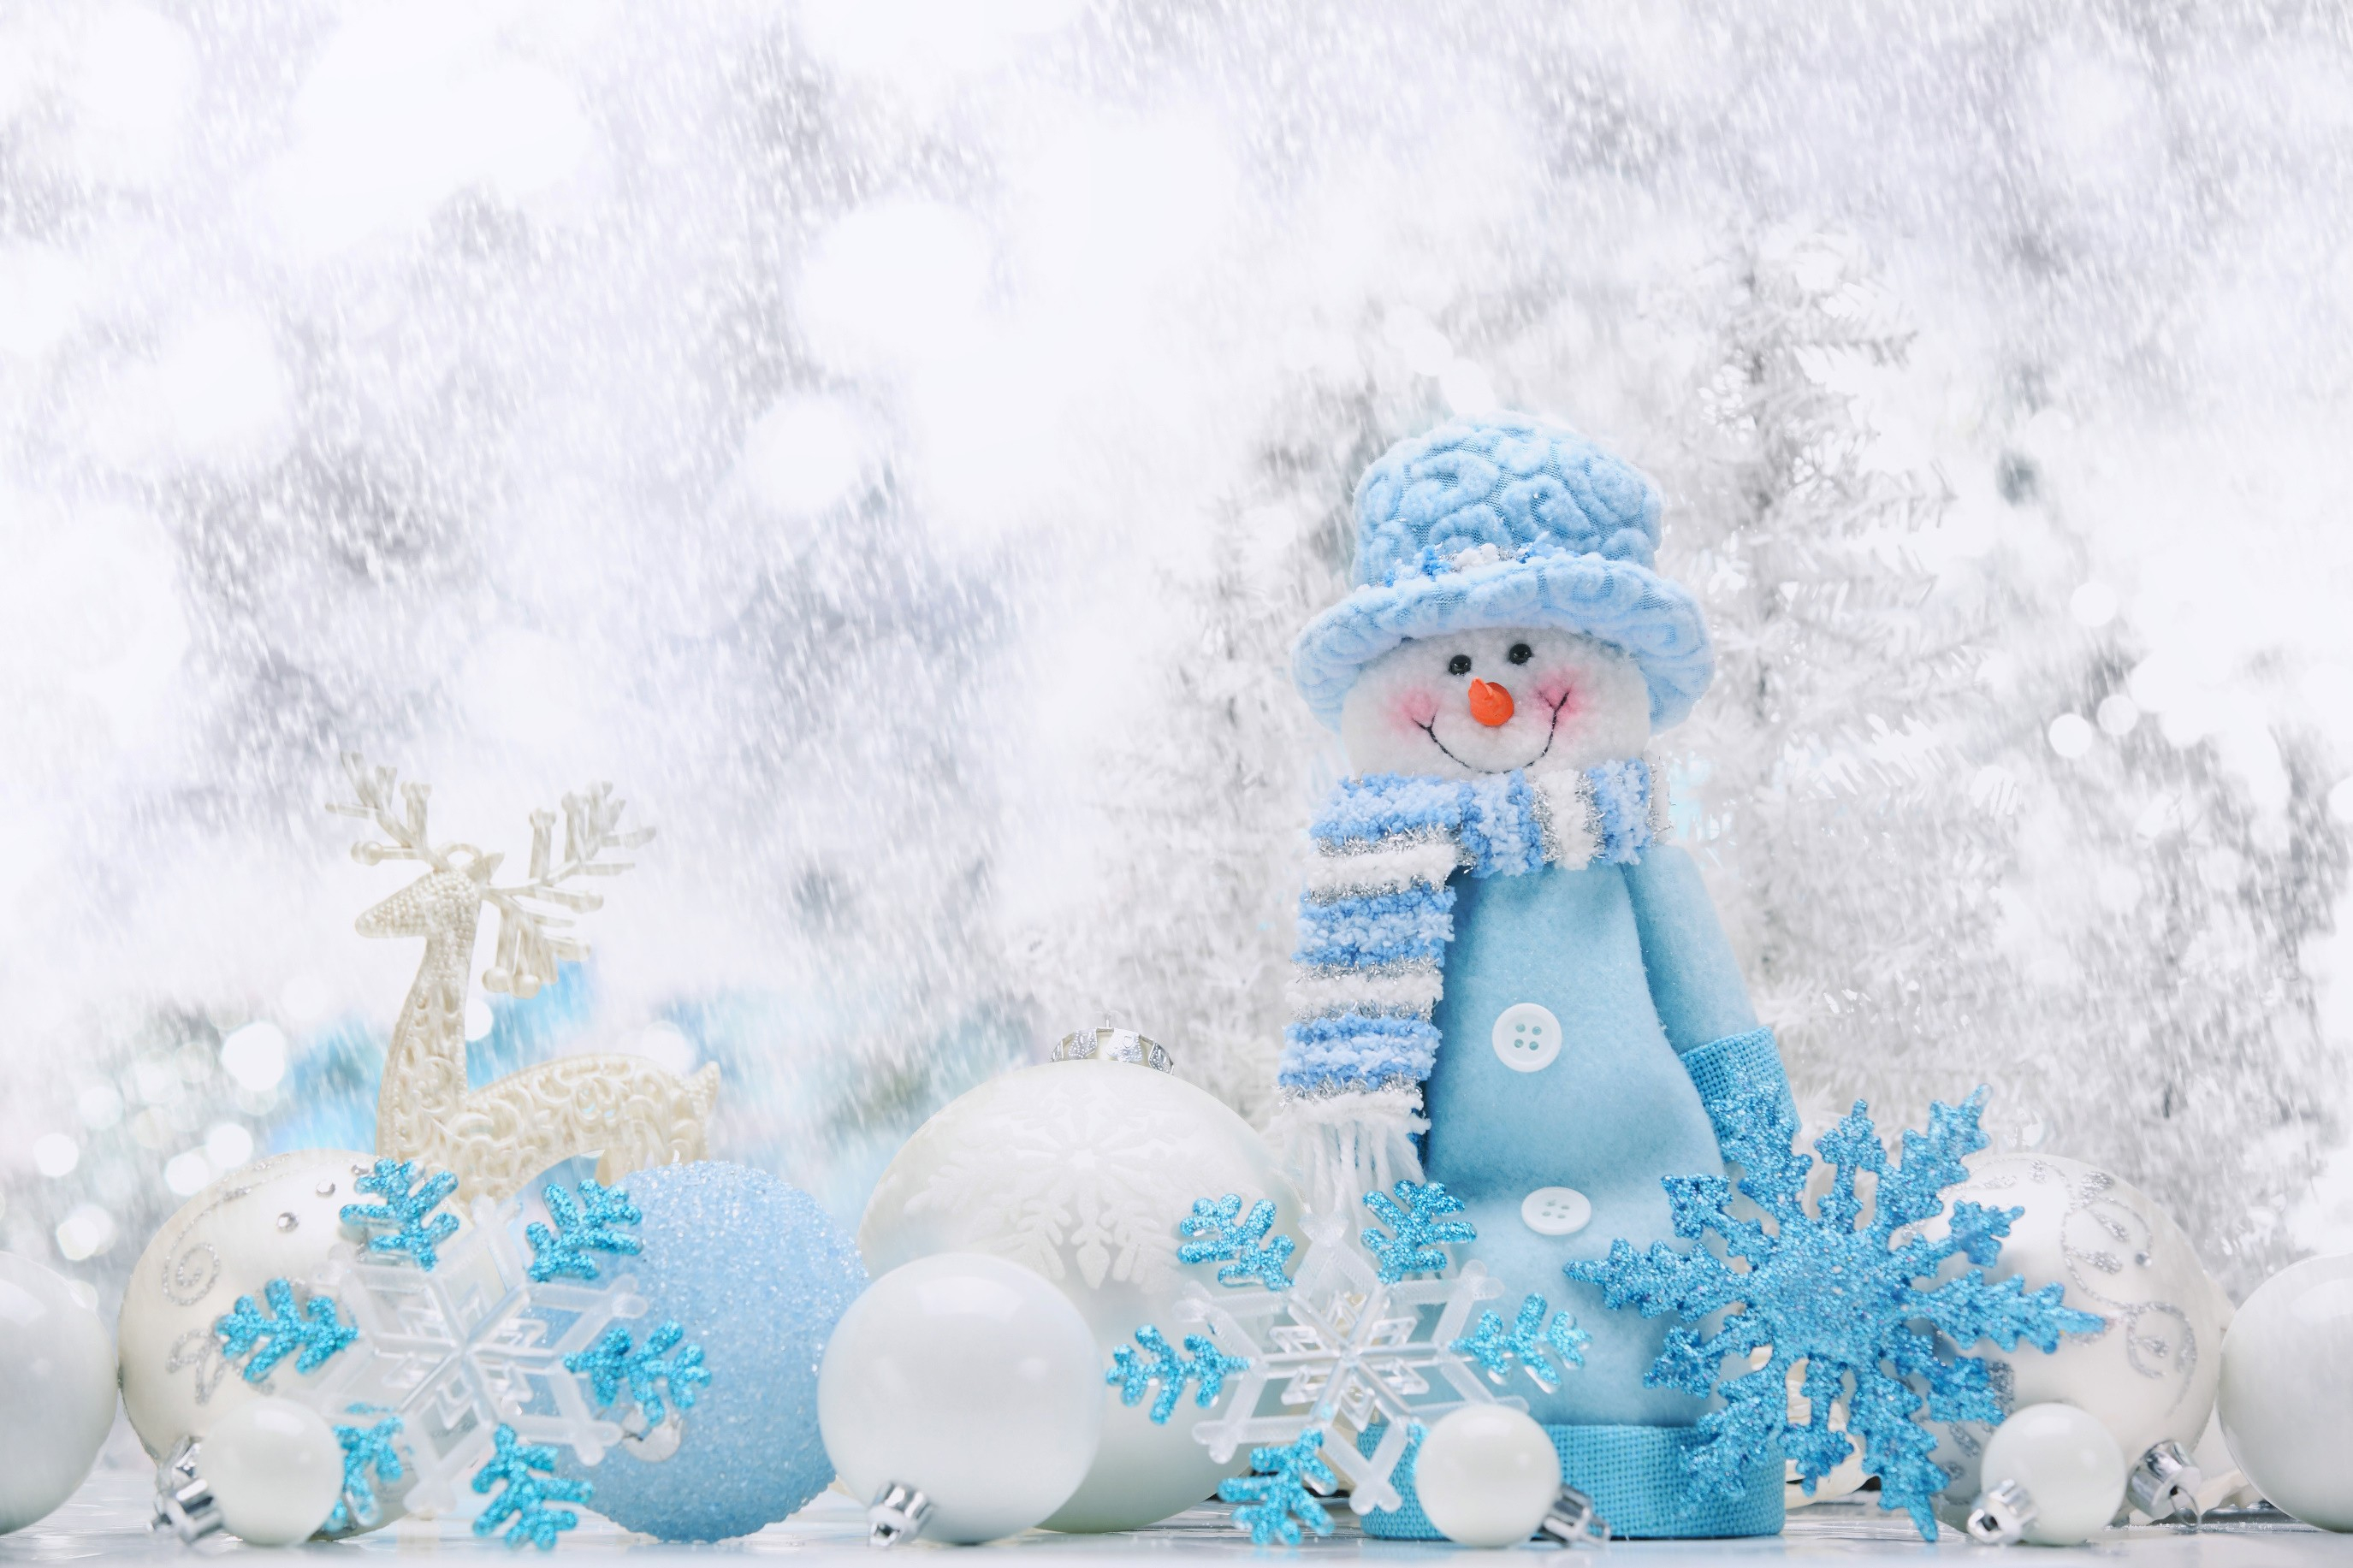 2750x1833 Wallpaper : snow, winter, blue, ice, snowman, Christmas, Freezing, weather, season mxdp1 83608 HD Wallpapers